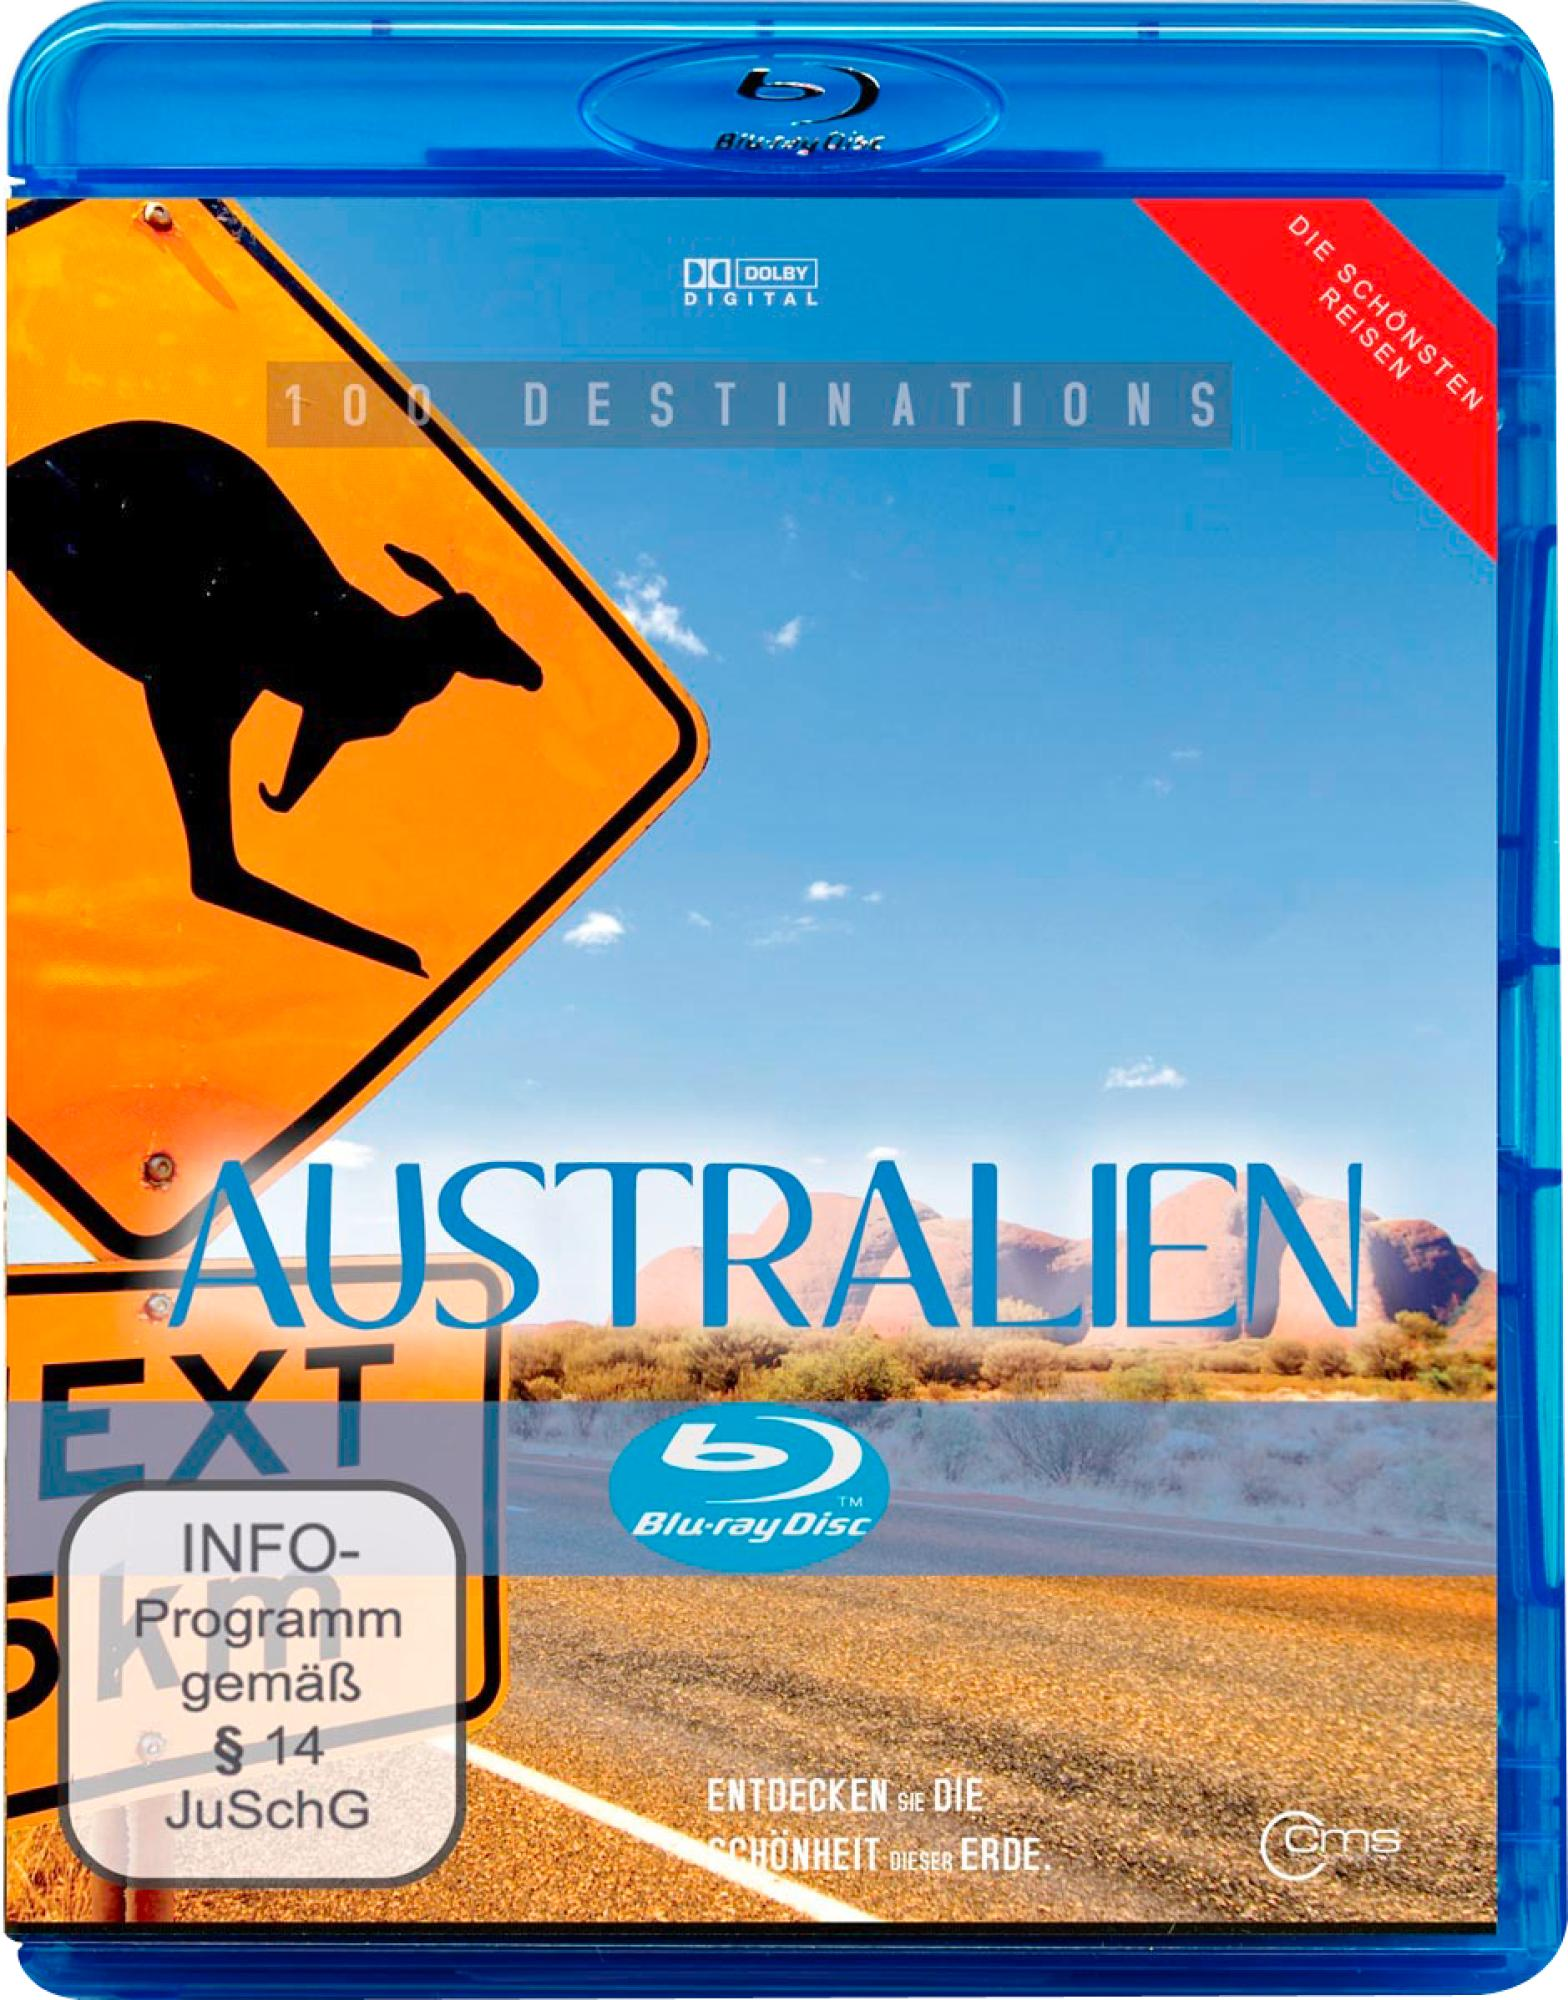 DESTINATIONS 100 - Blu-ray AUSTRALIEN